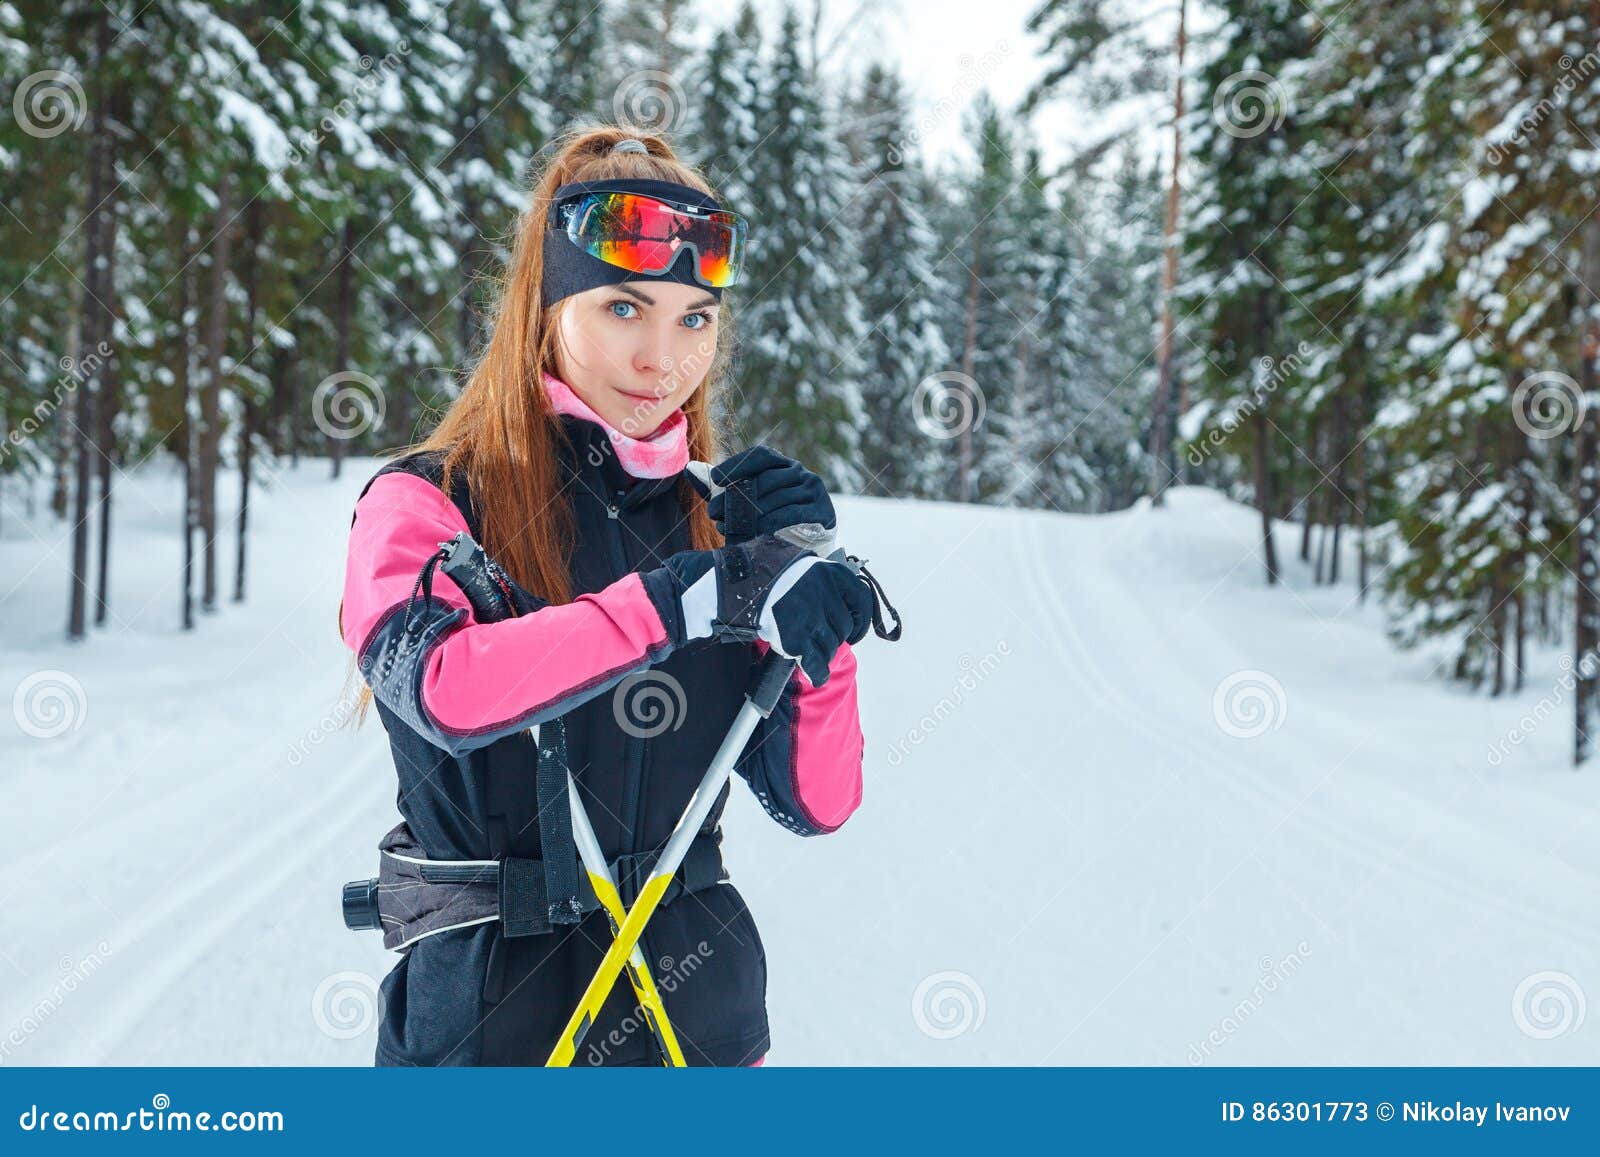 Professional Skier Girl White Skin Dress Ski Gloves Stock Image